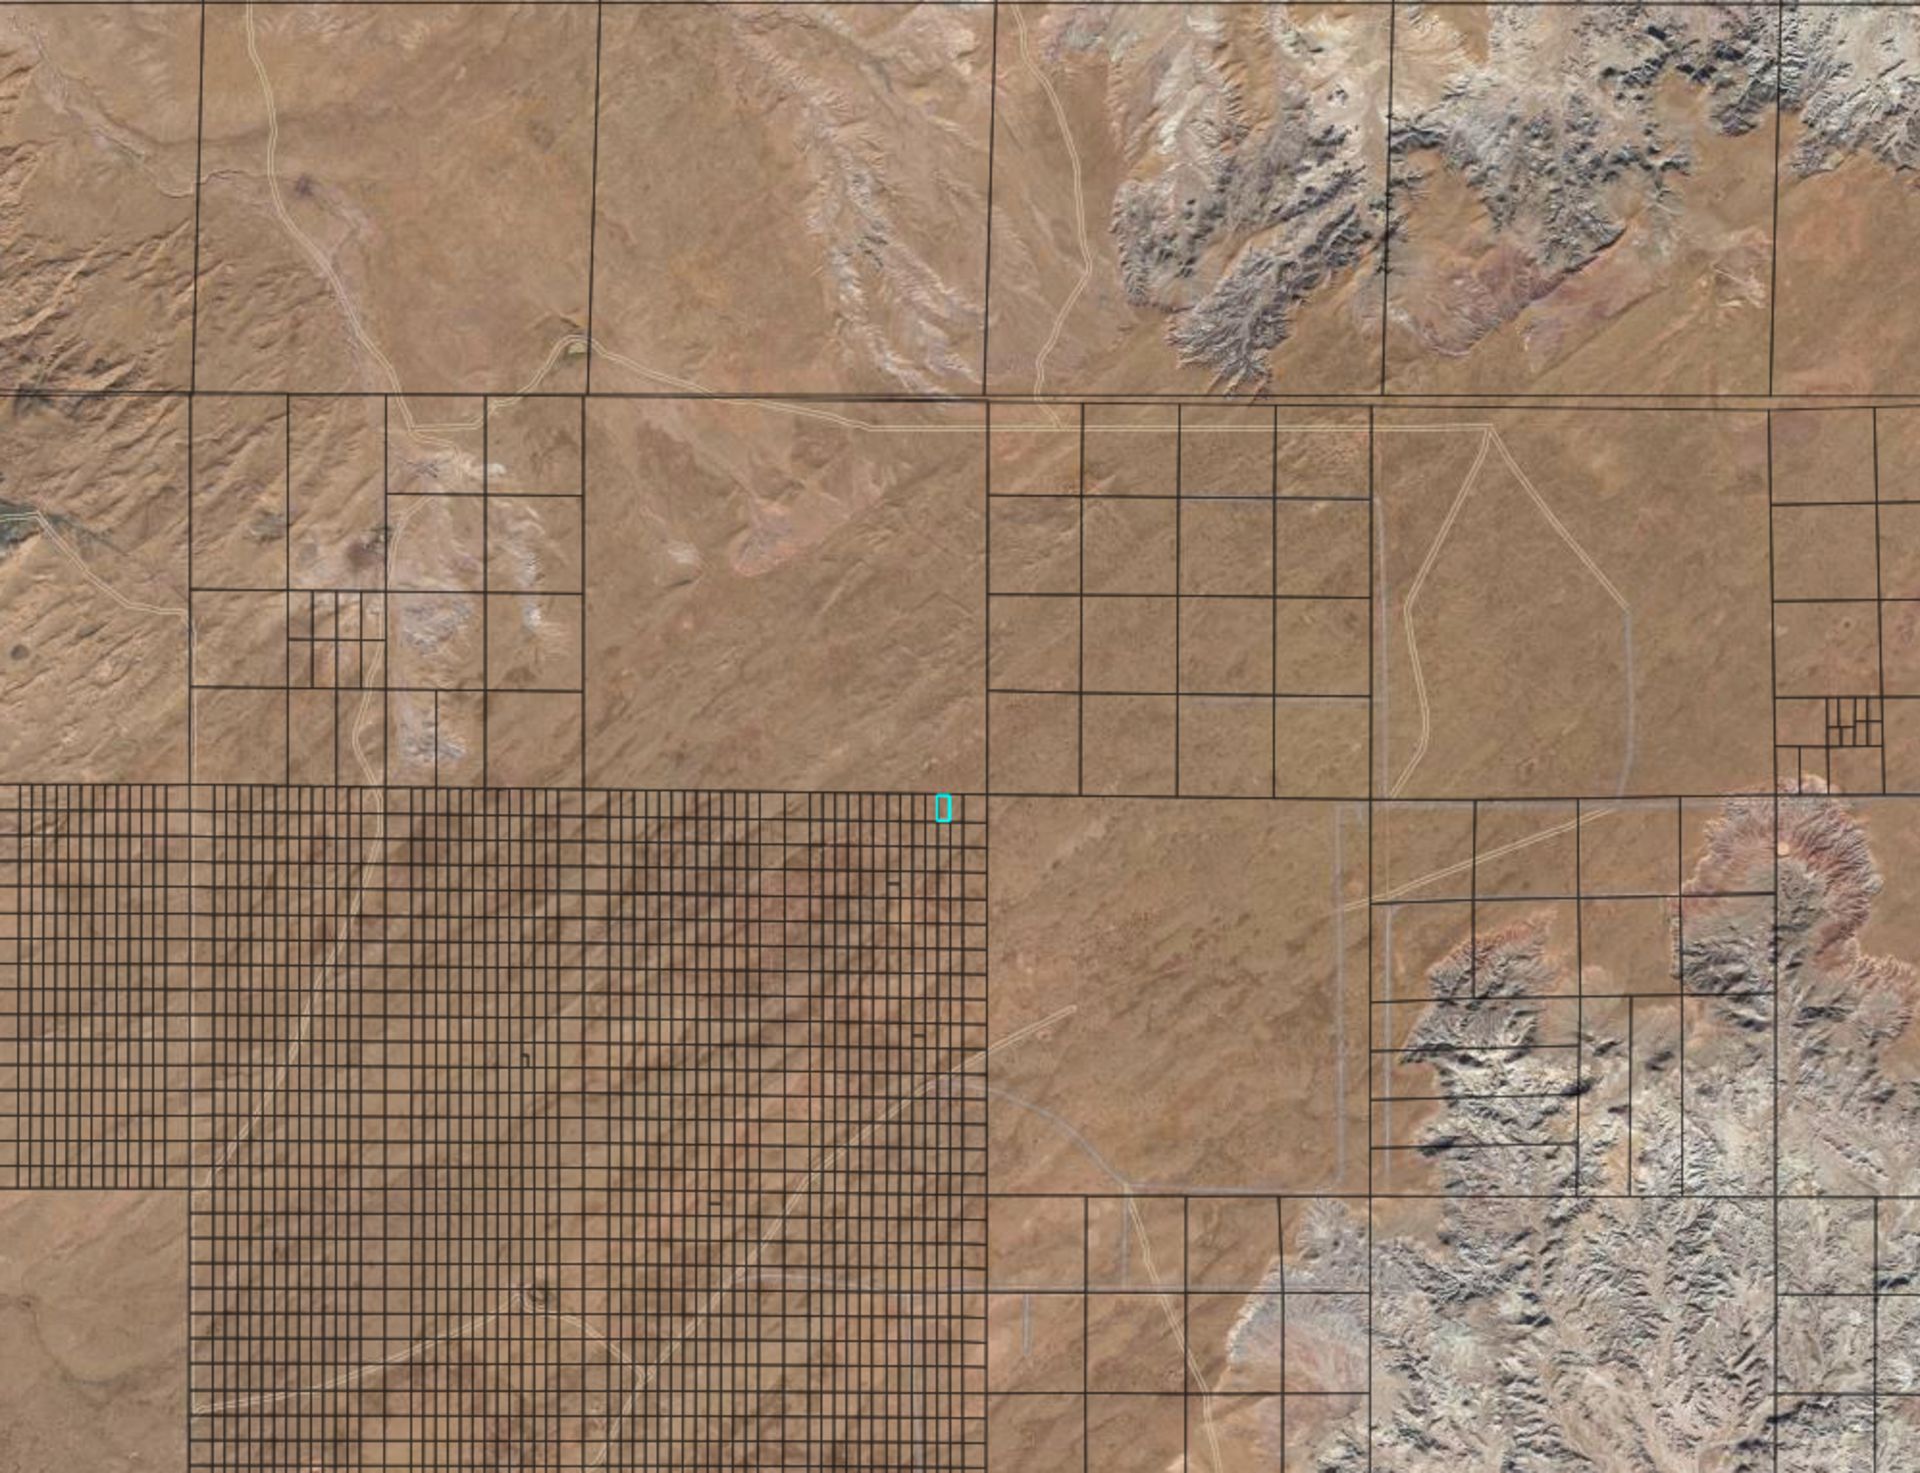 1.26 Acres in Breathtaking Navajo County, Arizona! - Image 8 of 13